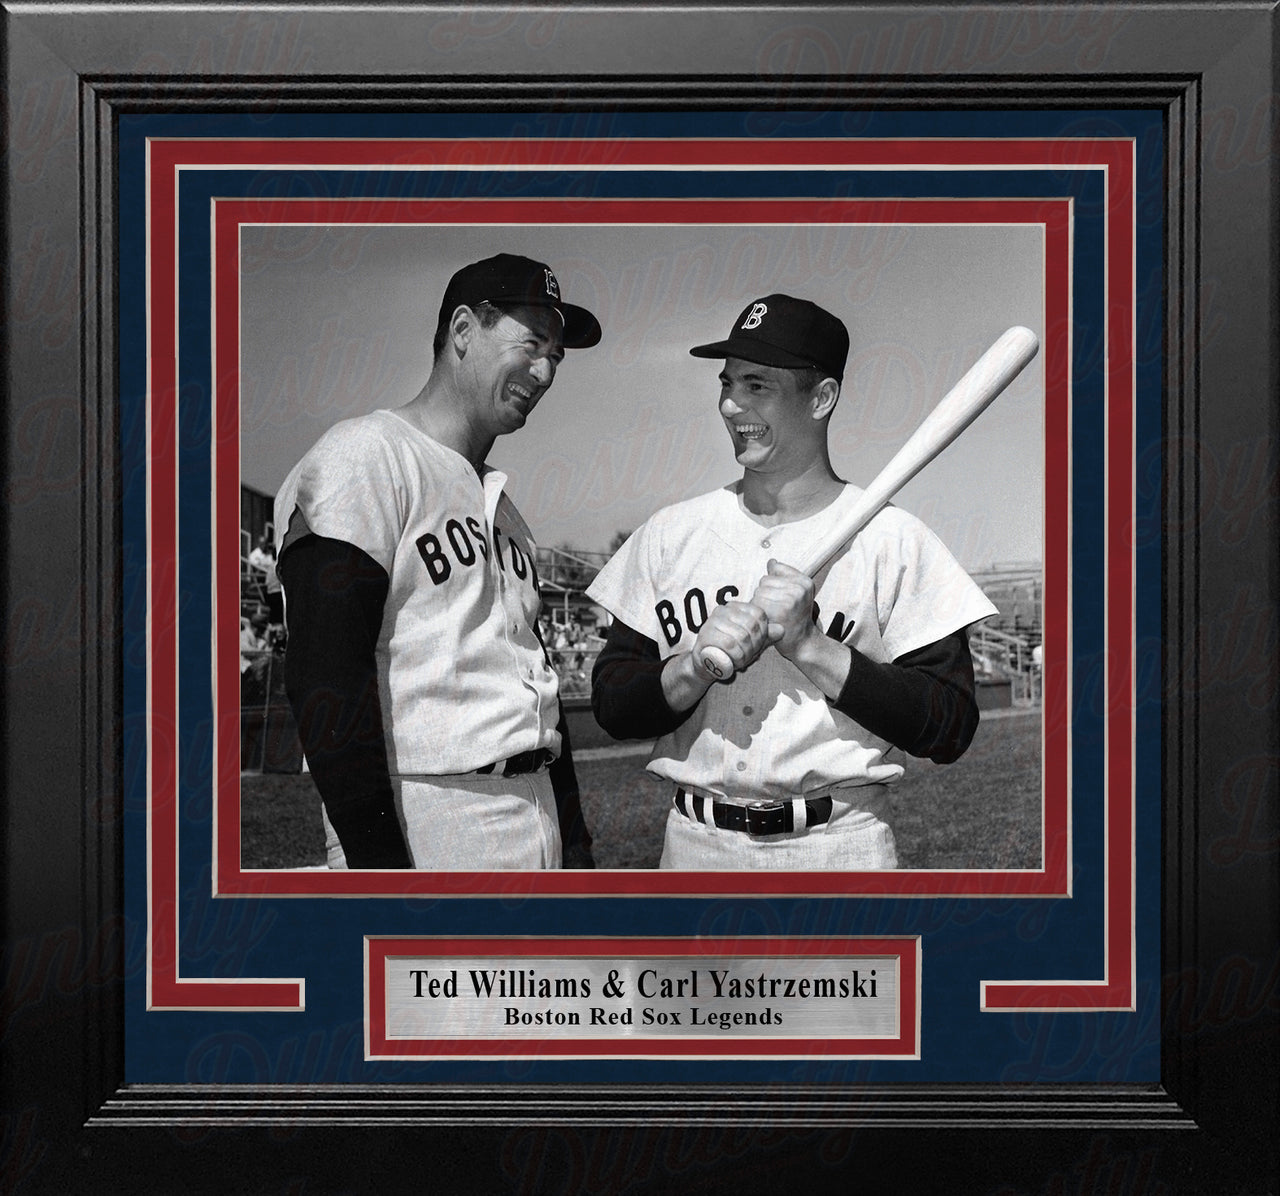 Ted Williams & Carl Yastrzemski Boston Red Sox 8" x 10" Framed Baseball Photo - Dynasty Sports & Framing 